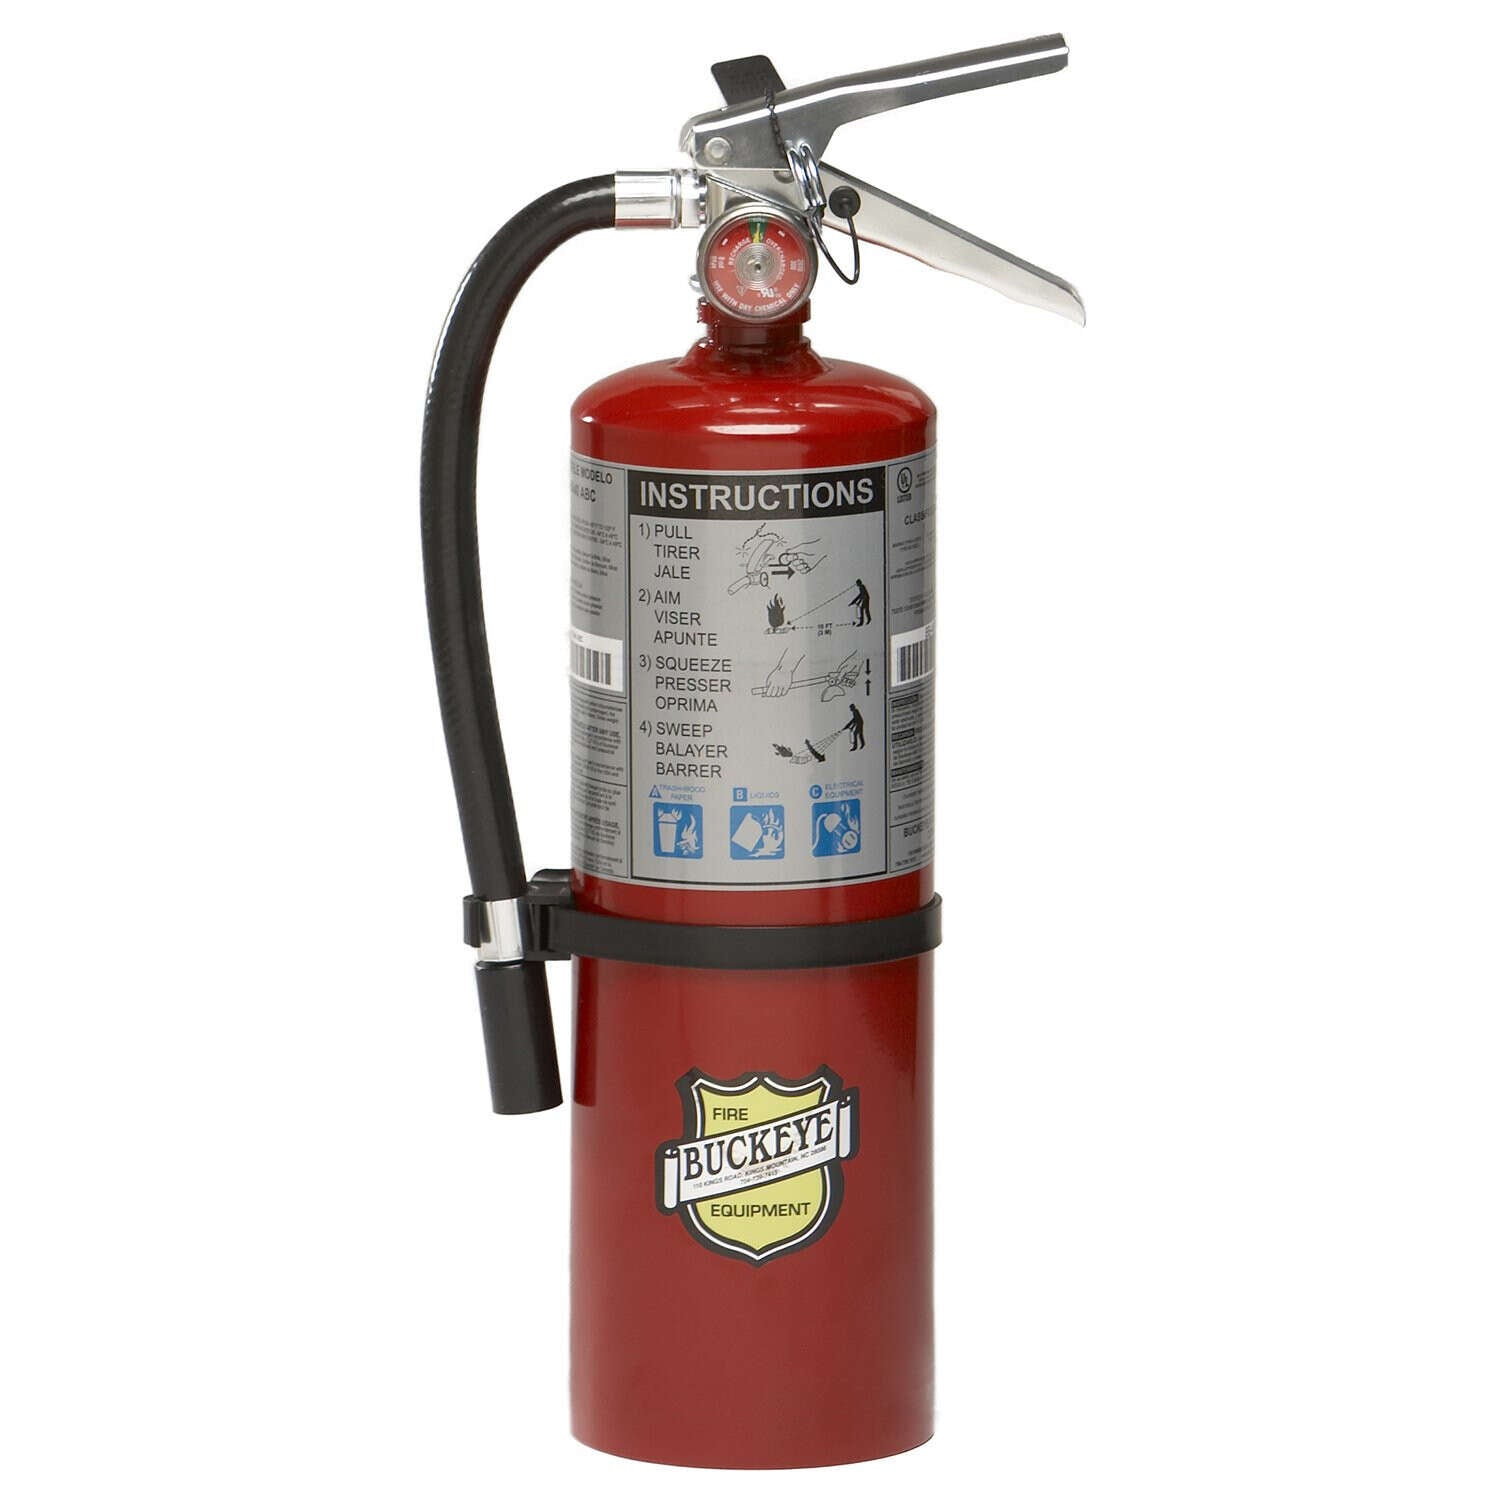 Buckeye (ABC) Dry Chemical Fire Extinguisher